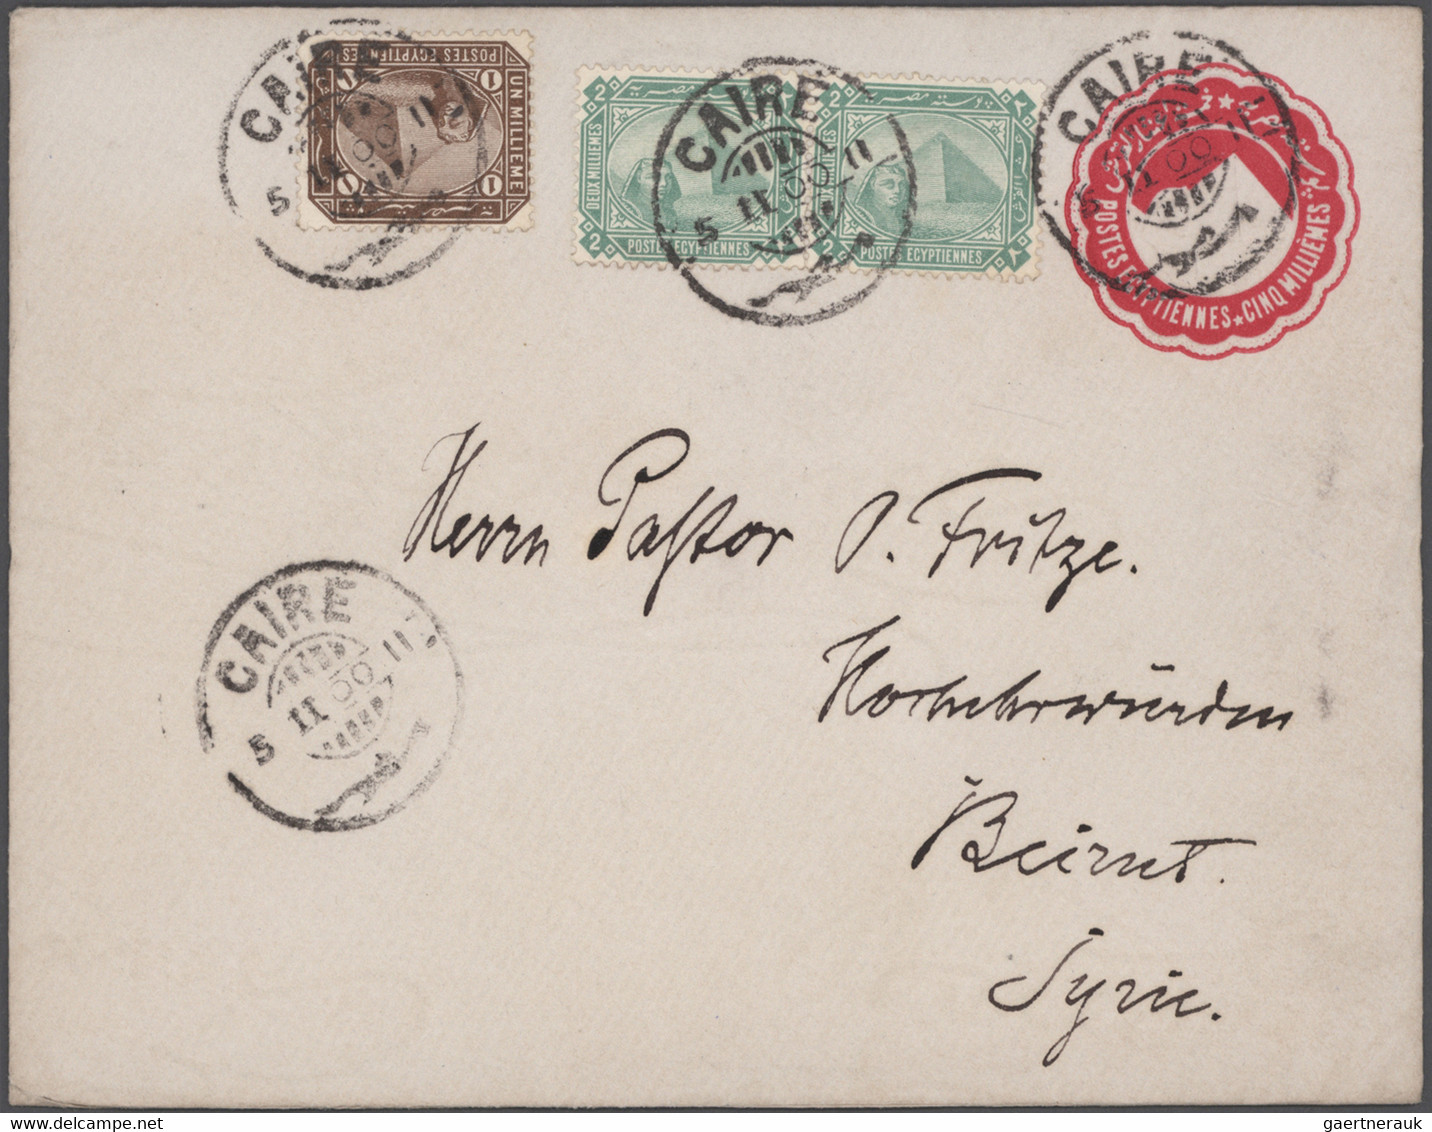 Egypt - postal stationery: 1879-1910's: Collection of 48 postal stationery cards